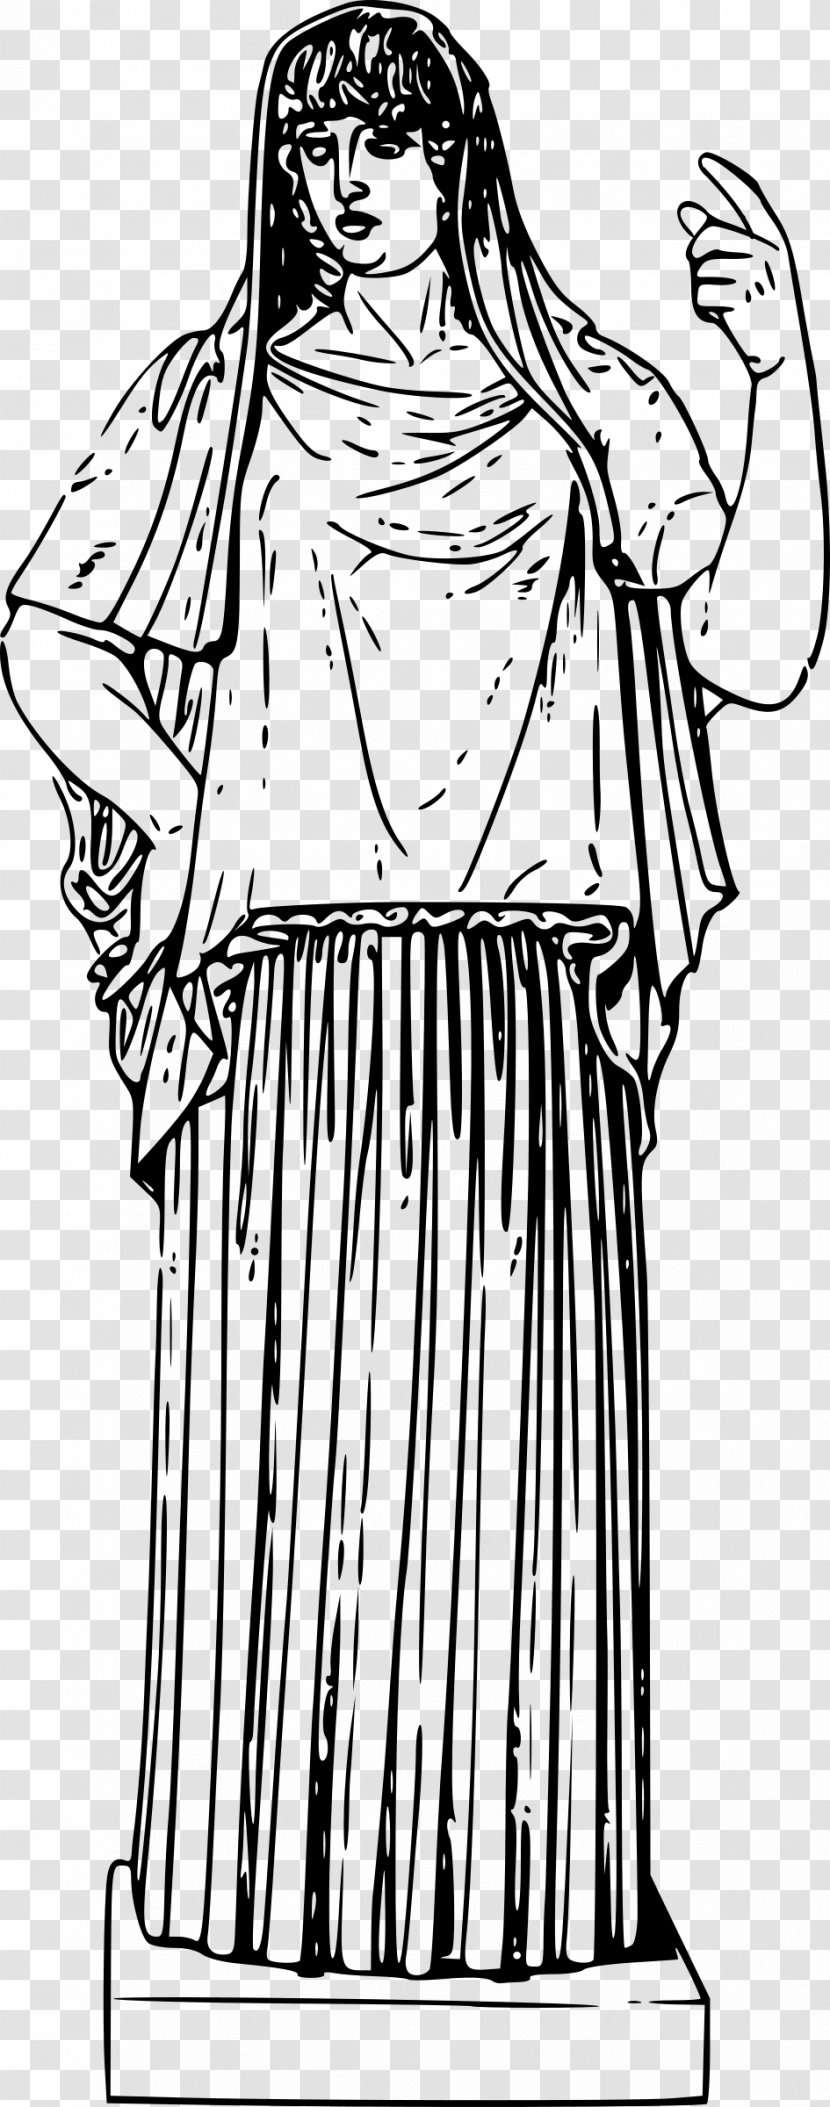 Demeter Hera Hestia Greek Mythology Clip Art - Costume Design - Goddess Transparent PNG